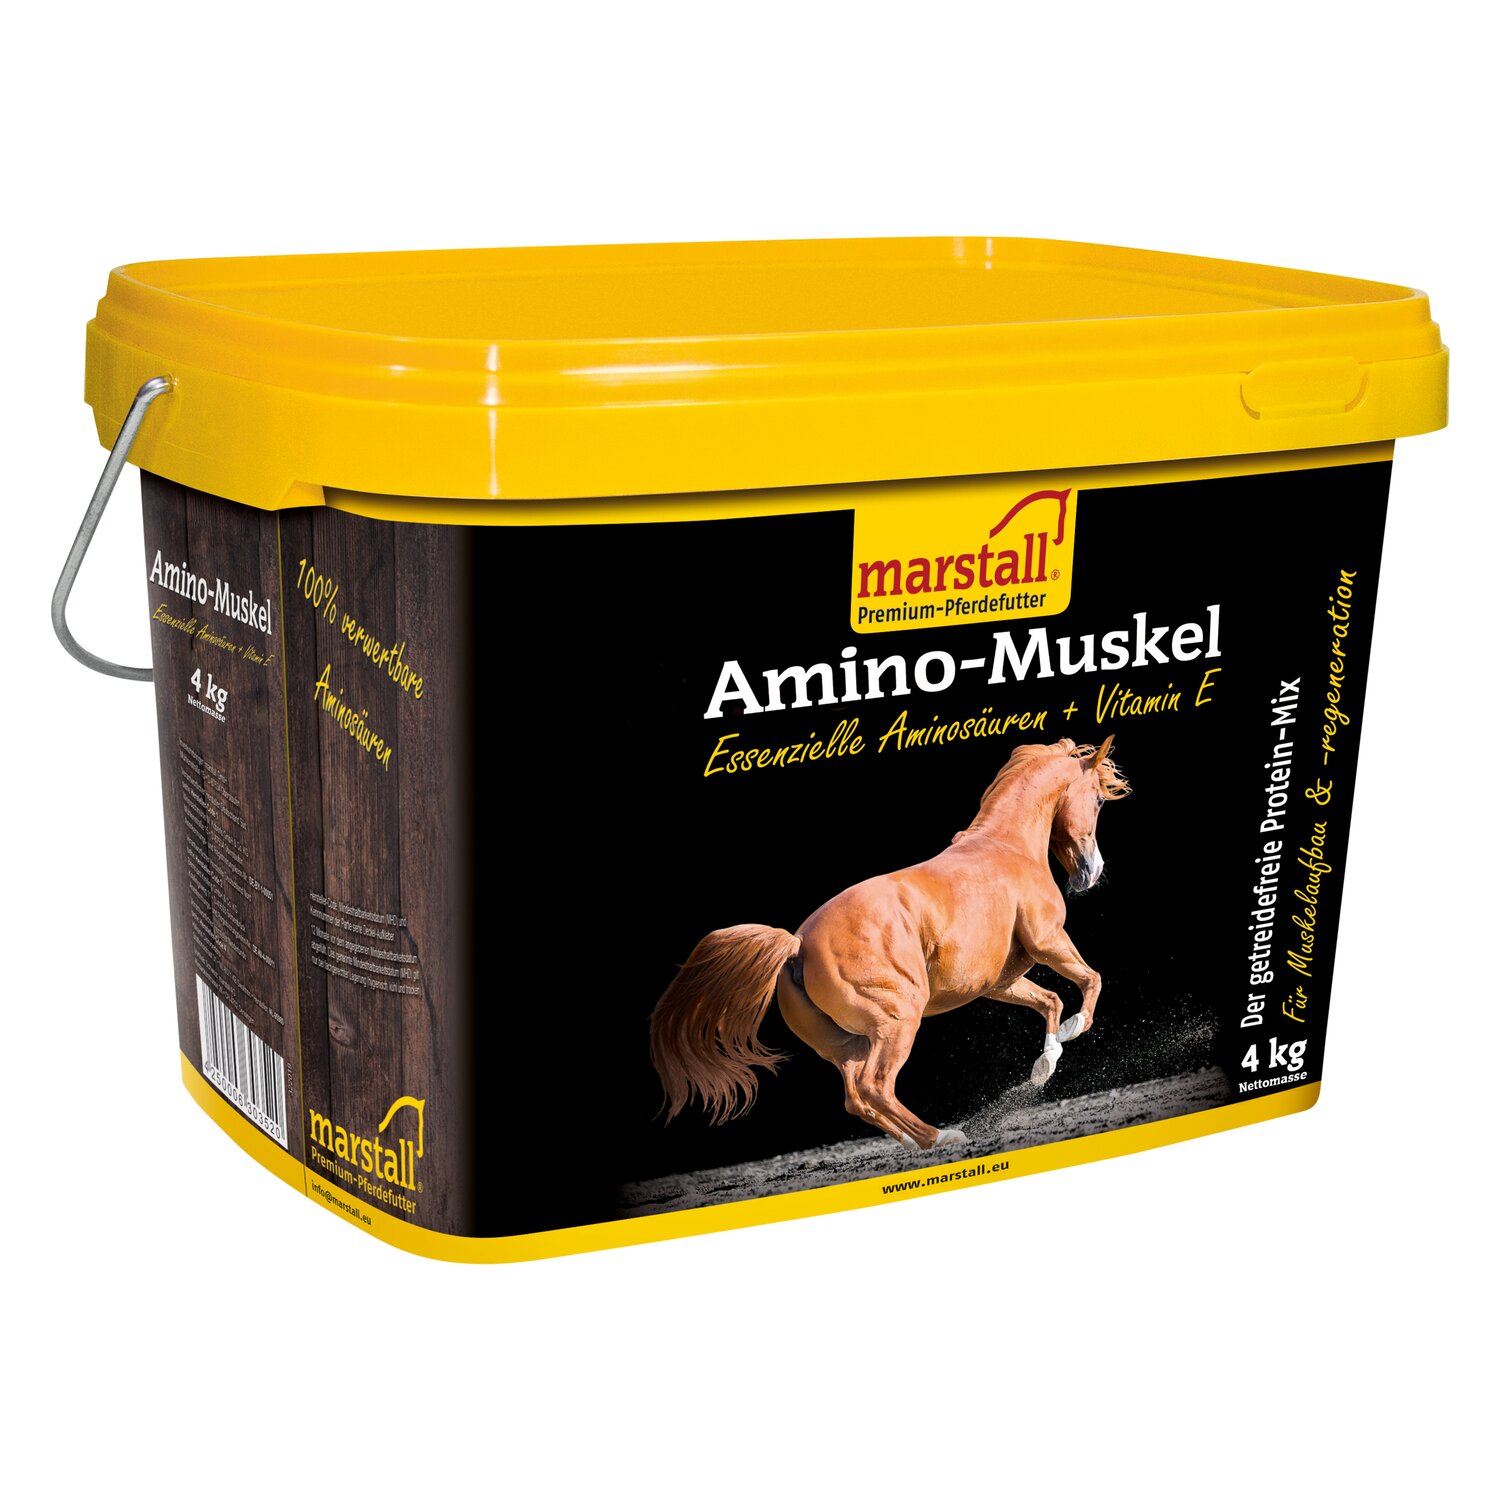 marstall Amino-Muskel Plus 10 kg